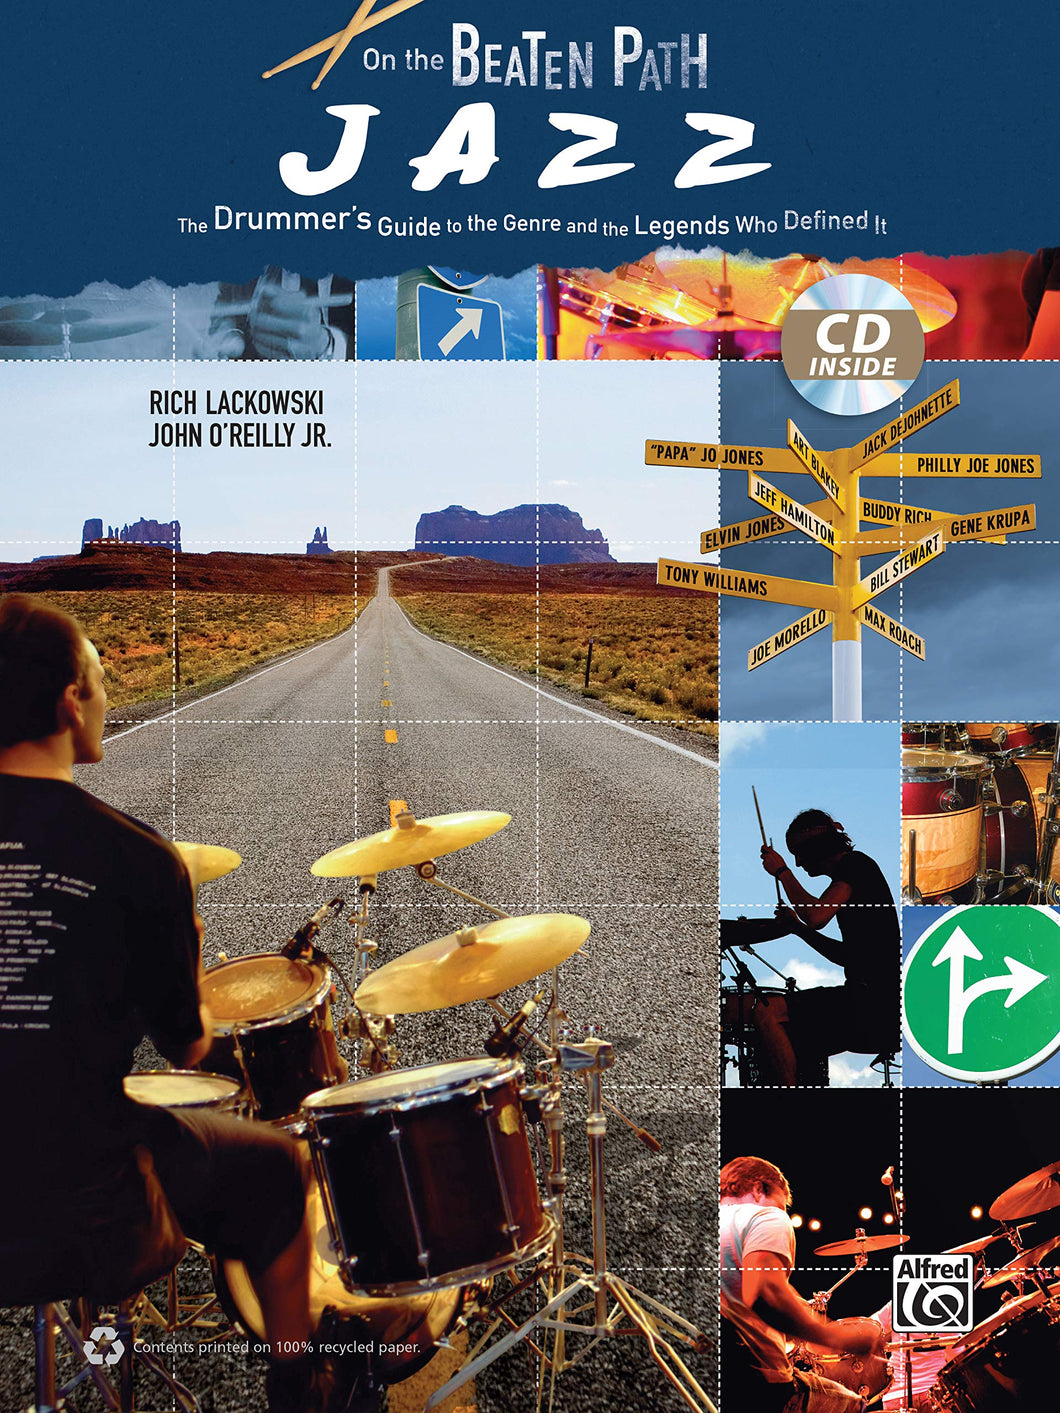 Lonnie's Lament - John Coltrane Quartetz - Collection of Drum Transcriptions / Drum Sheet Music - Alfred Music OBPJDGLDI